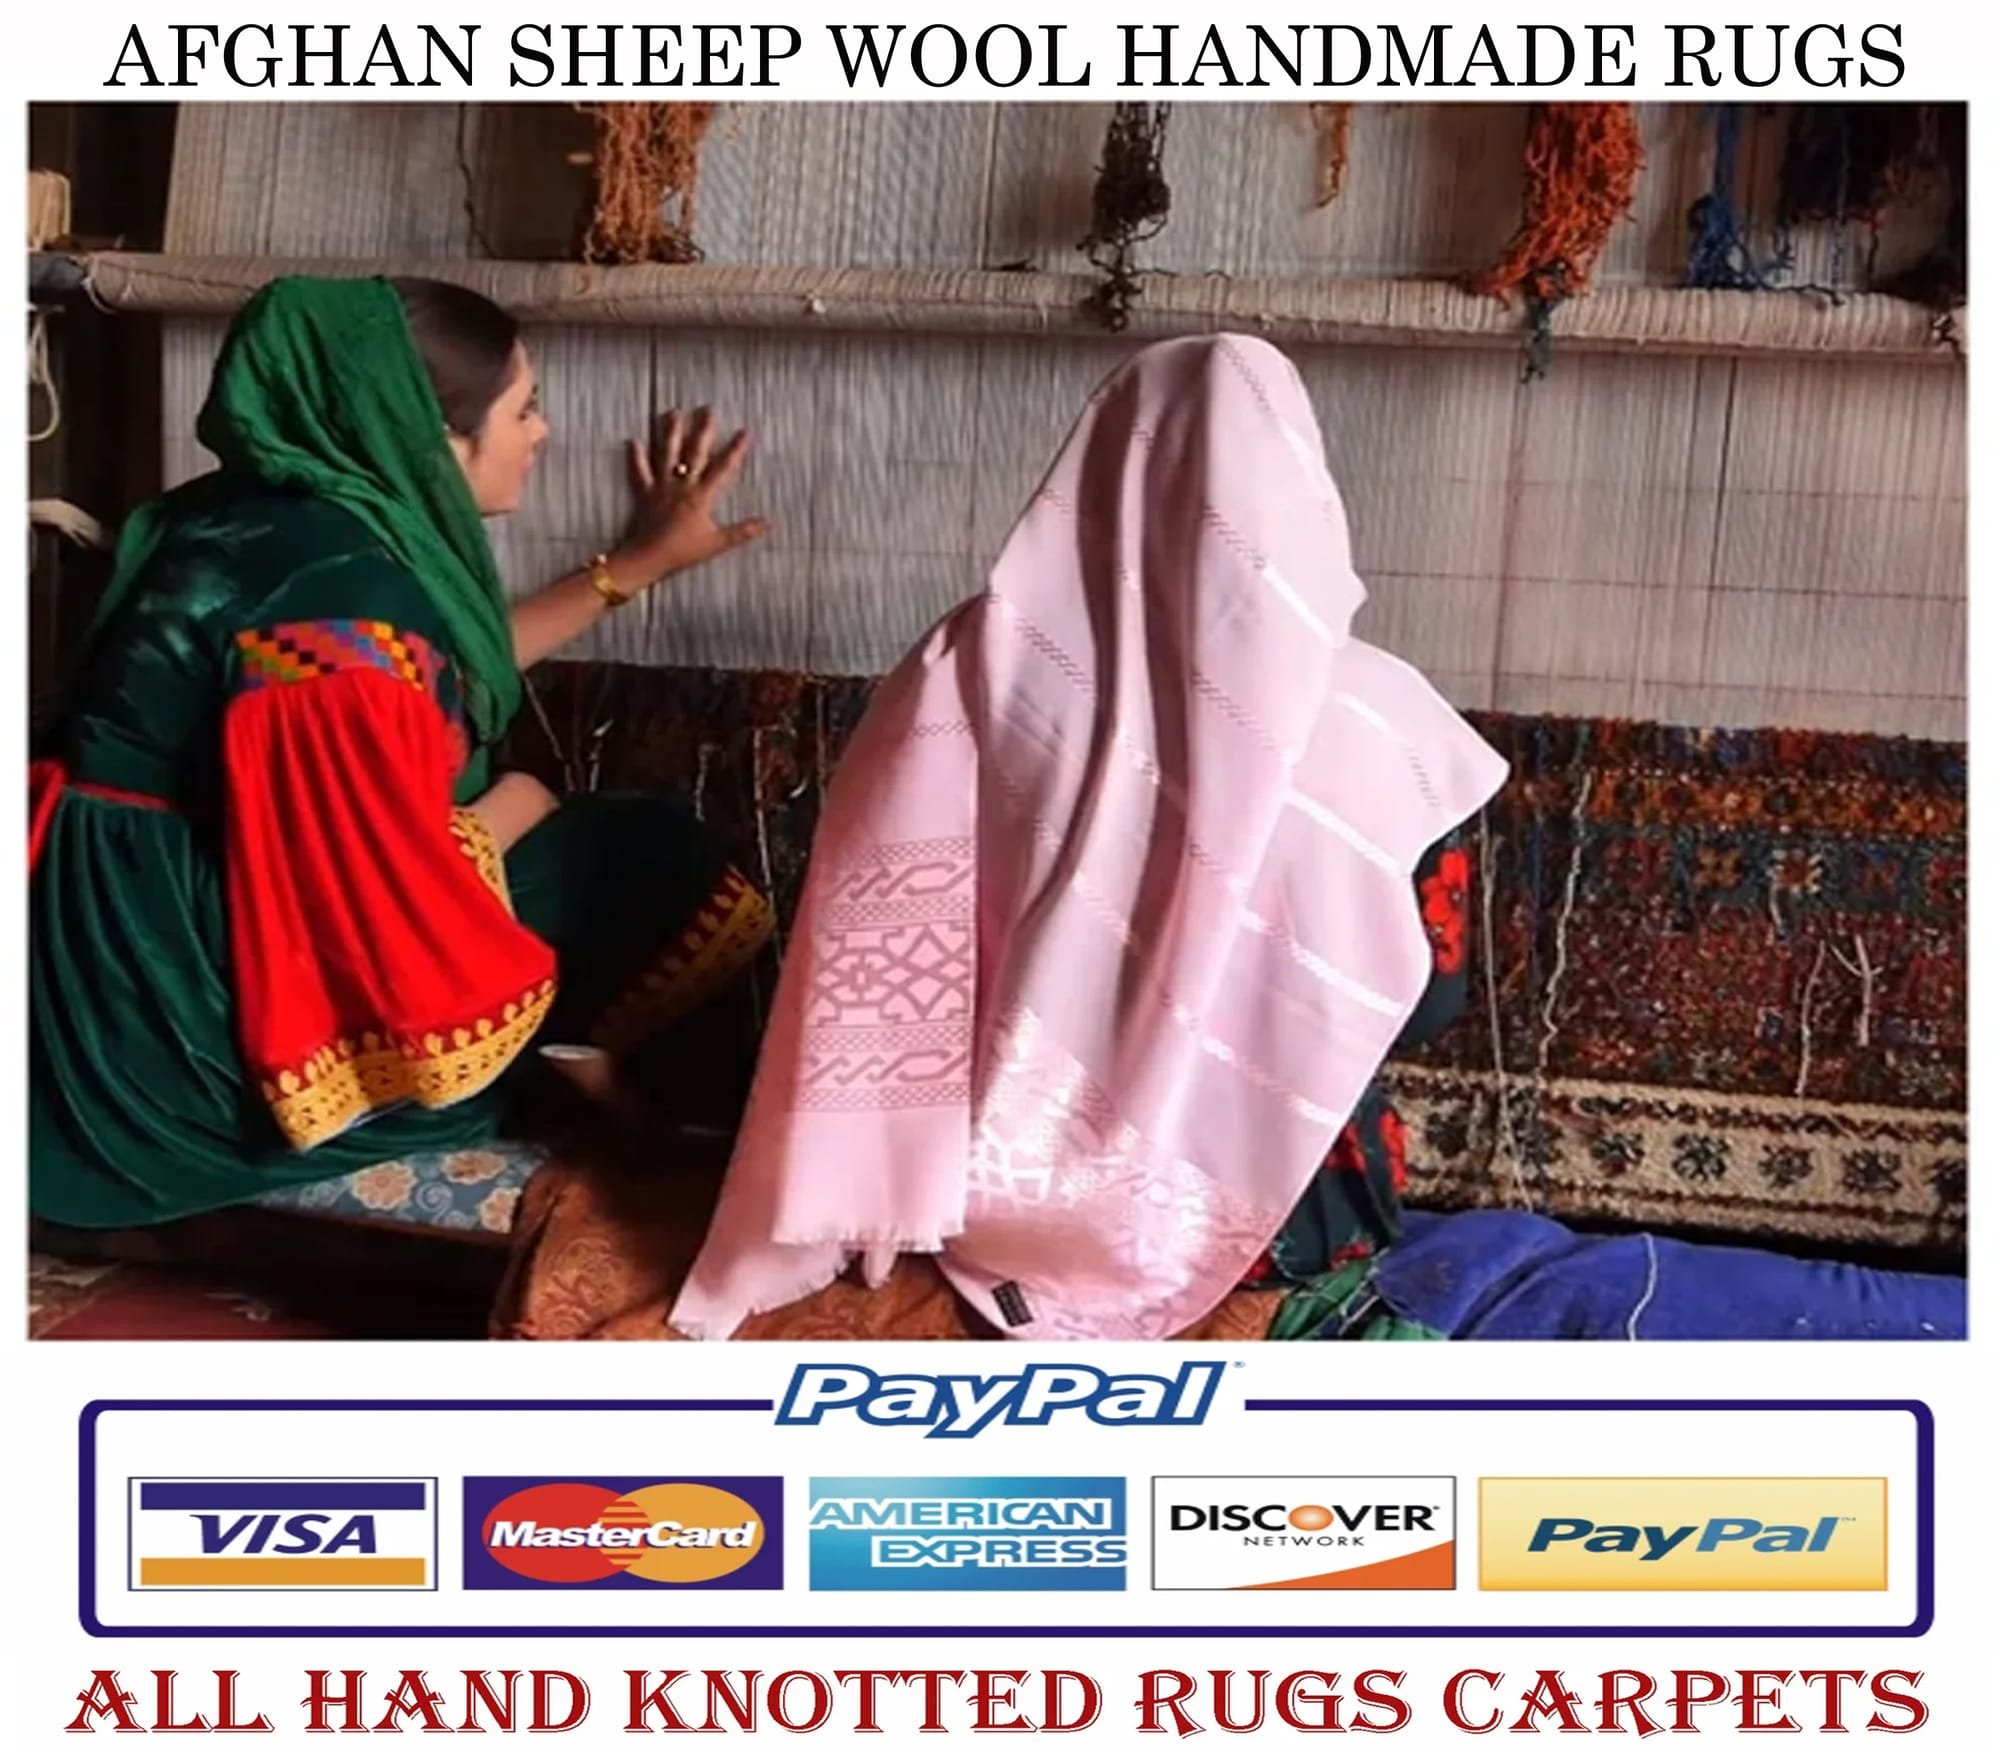 Tribal design Afghan area rug 3'4x5'1